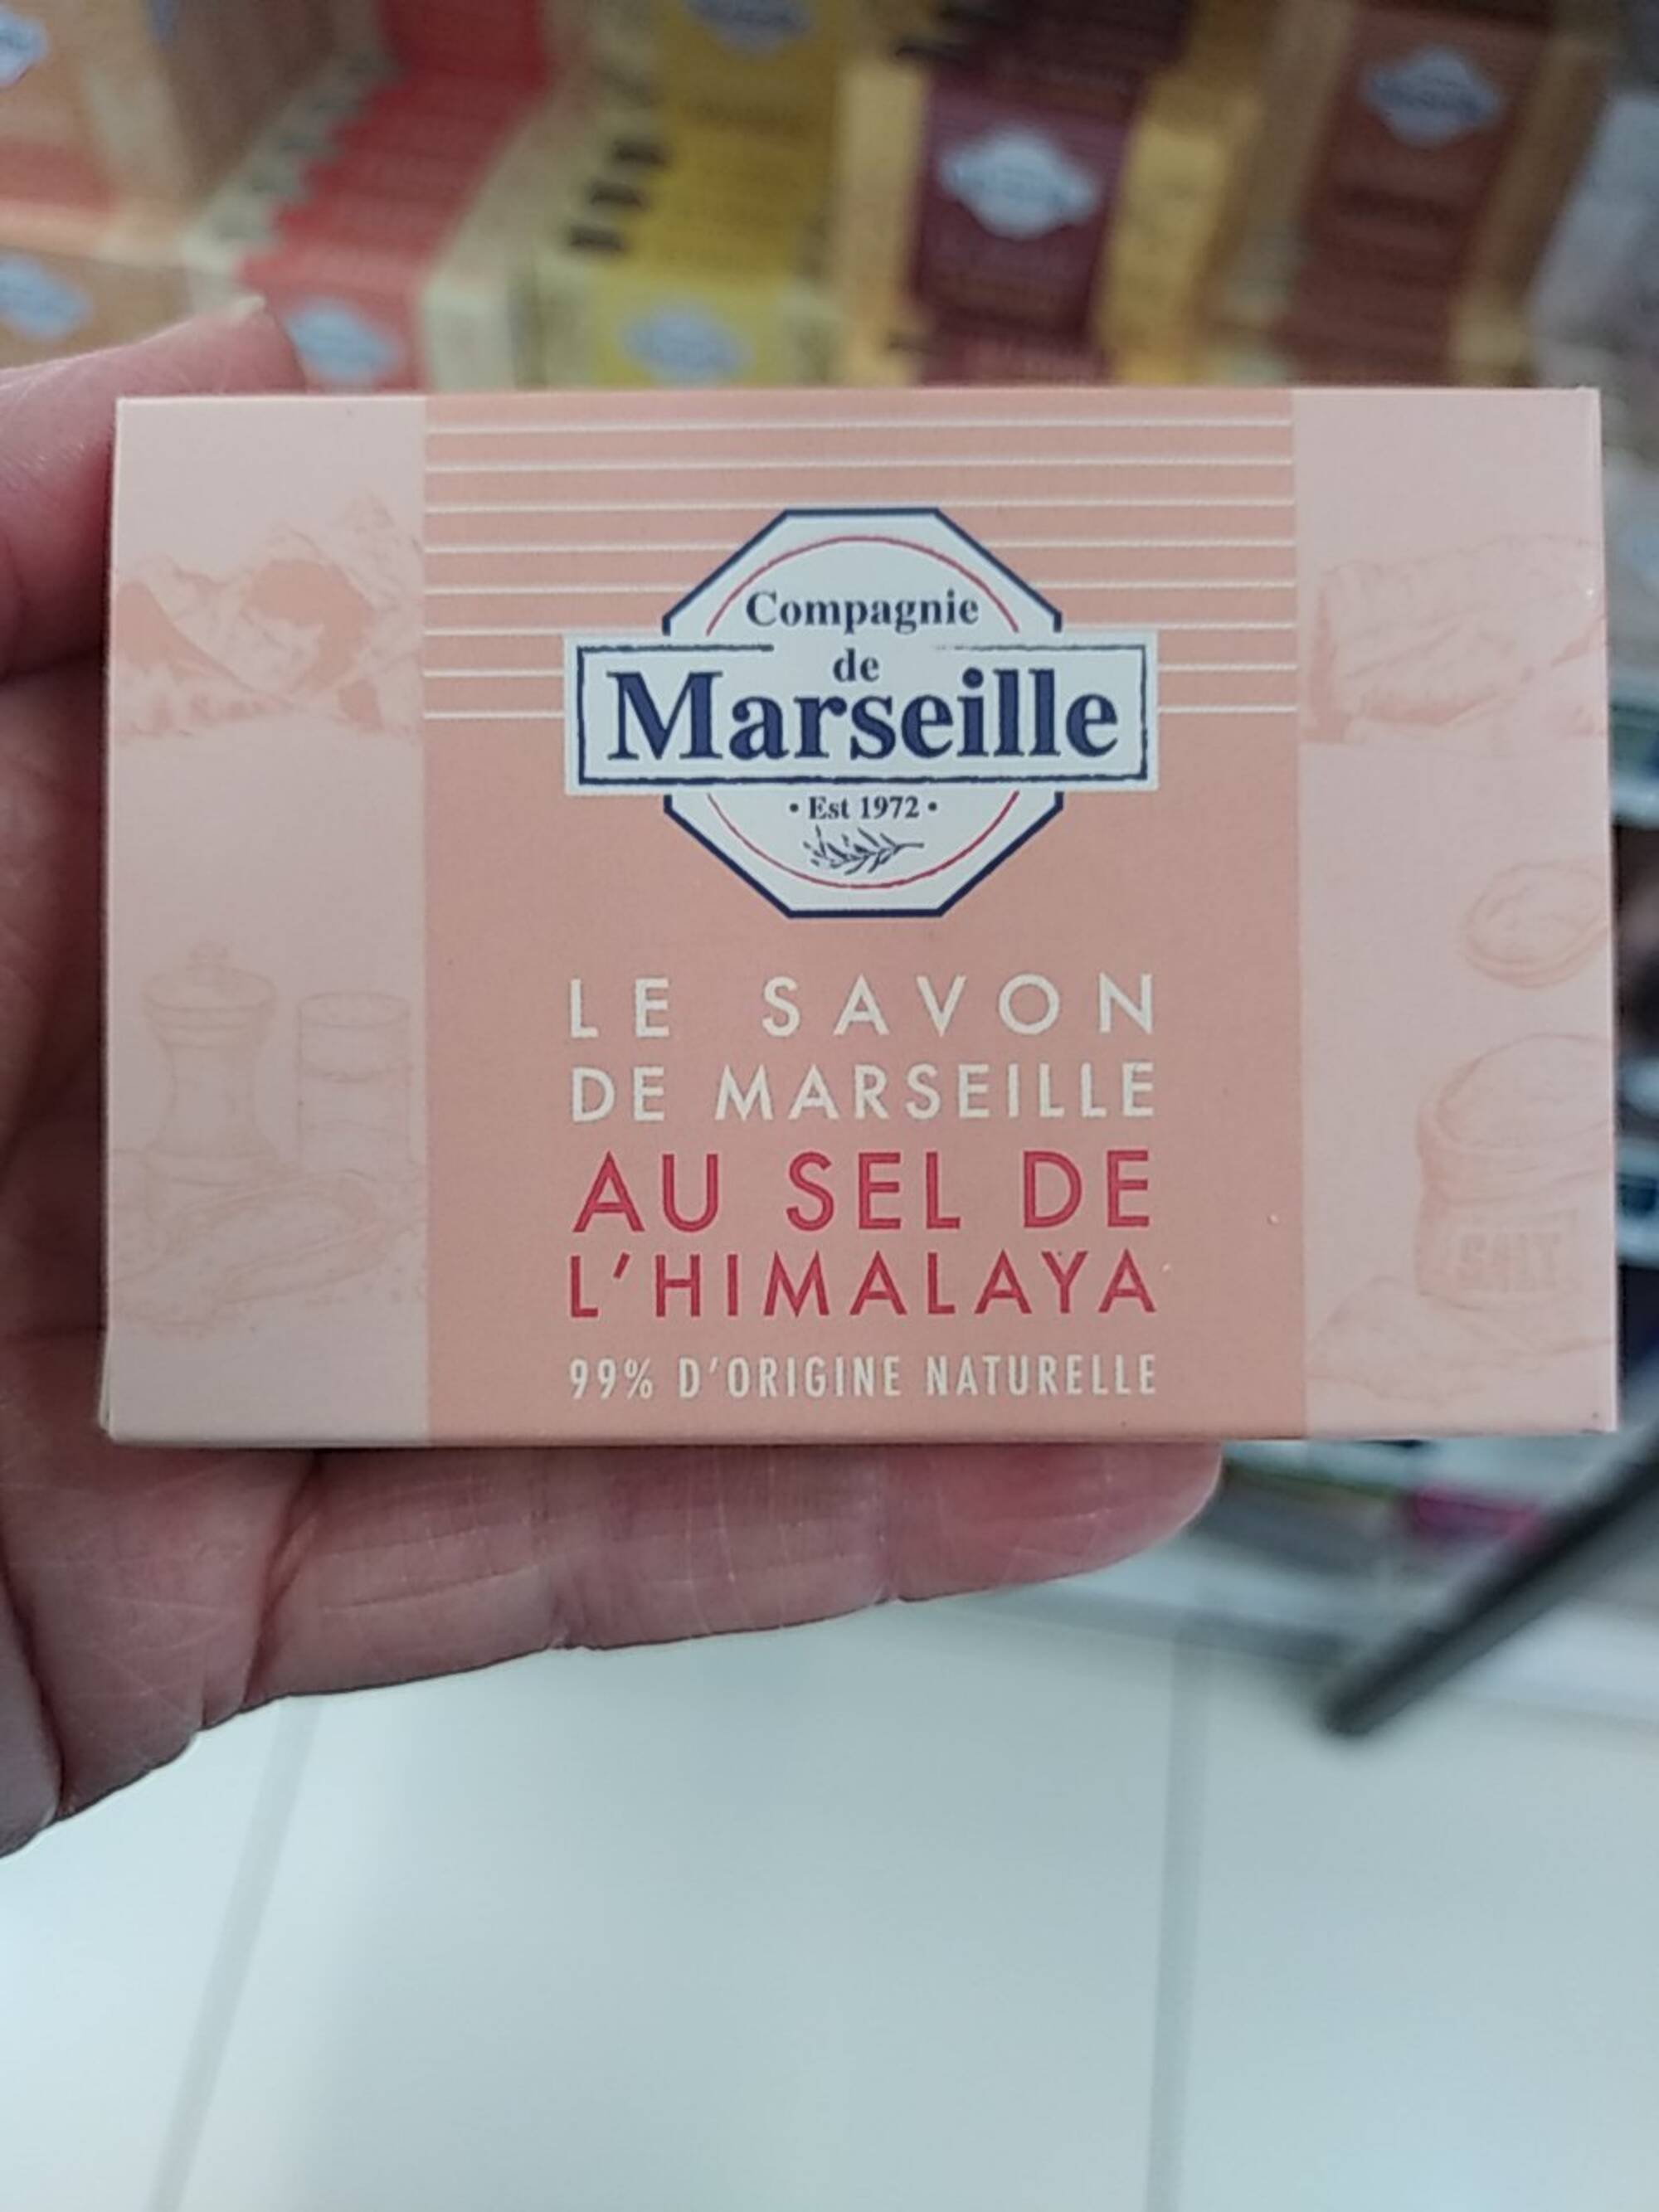 COMPAGNIE DE MARSEILLE - Le savon de Marseille au sel de l'Himalaya